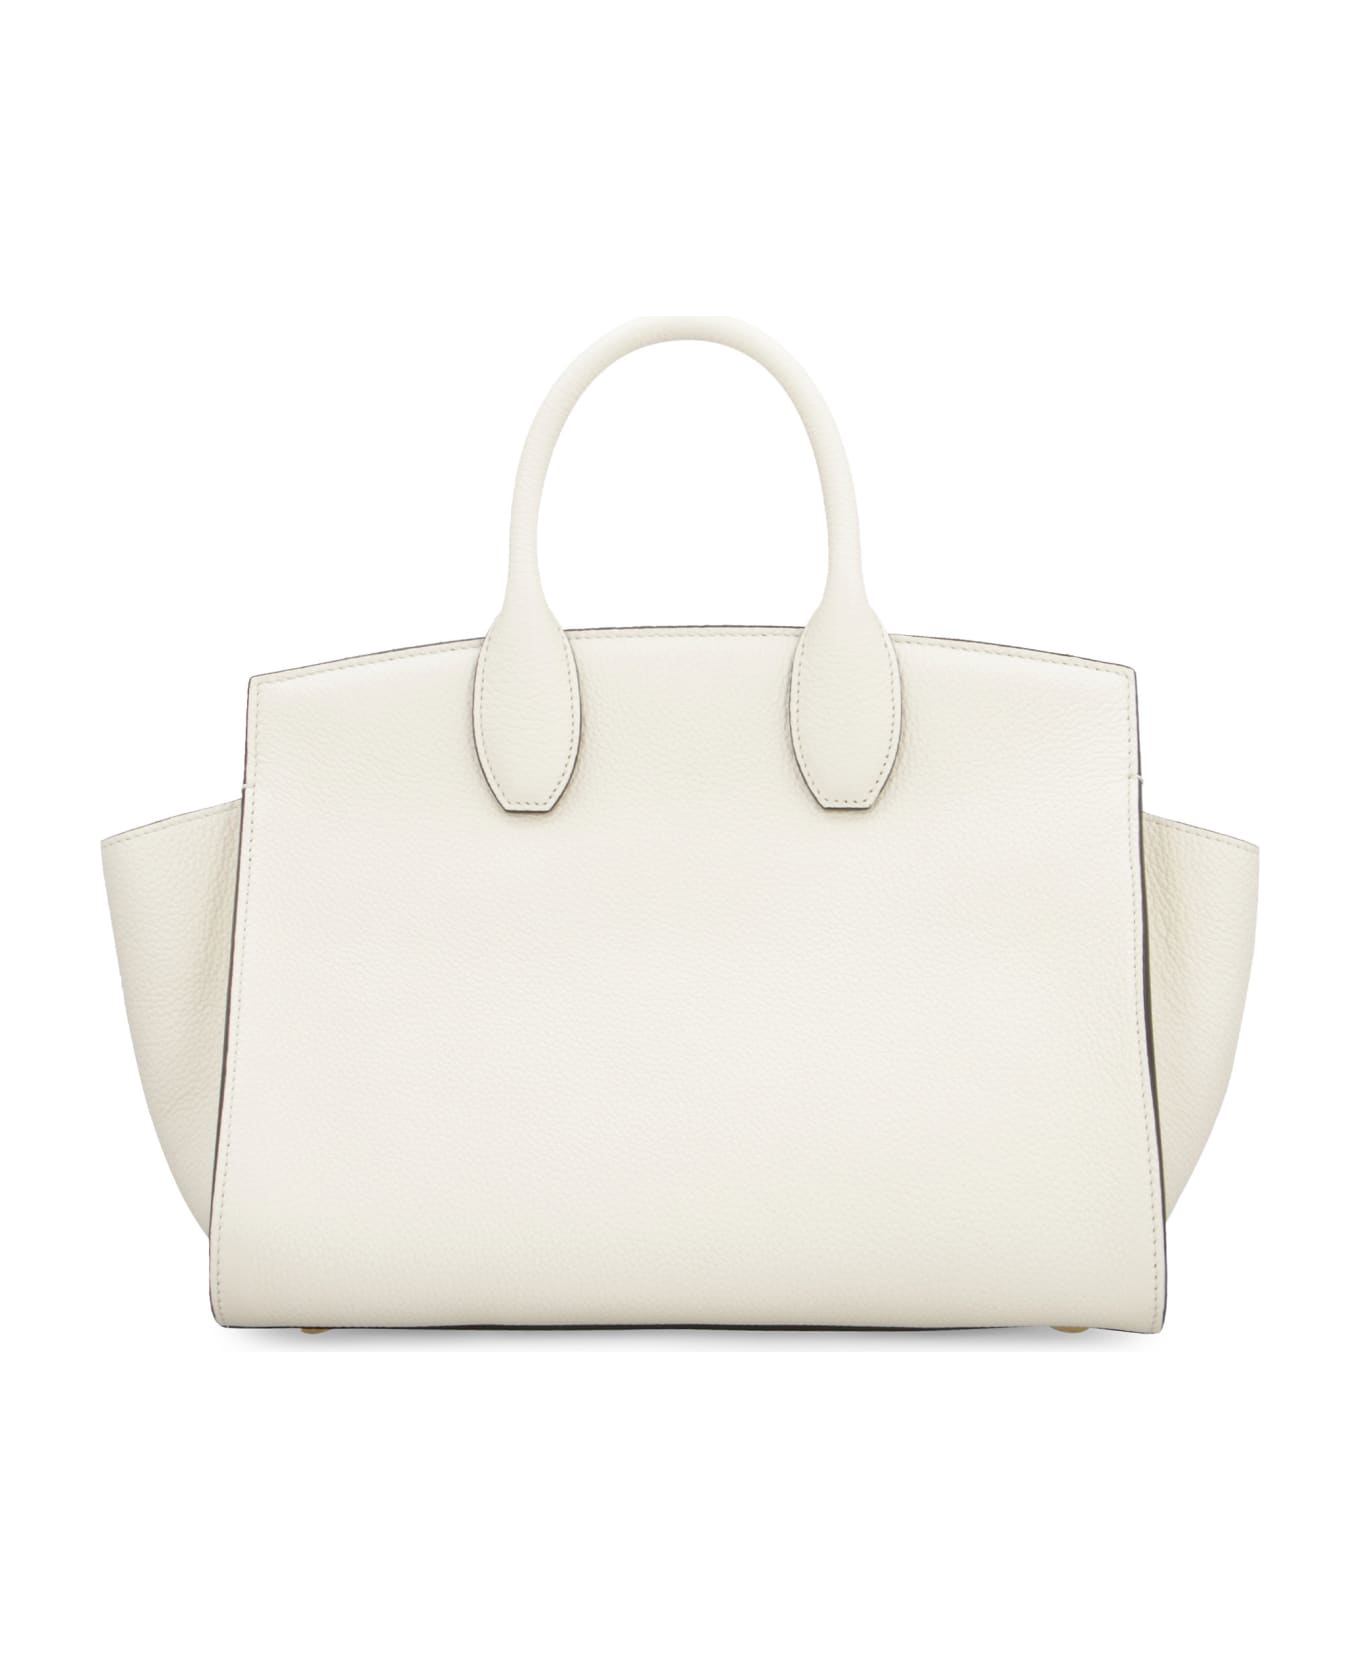 Ferragamo Studio Soft Leather Handbag - panna